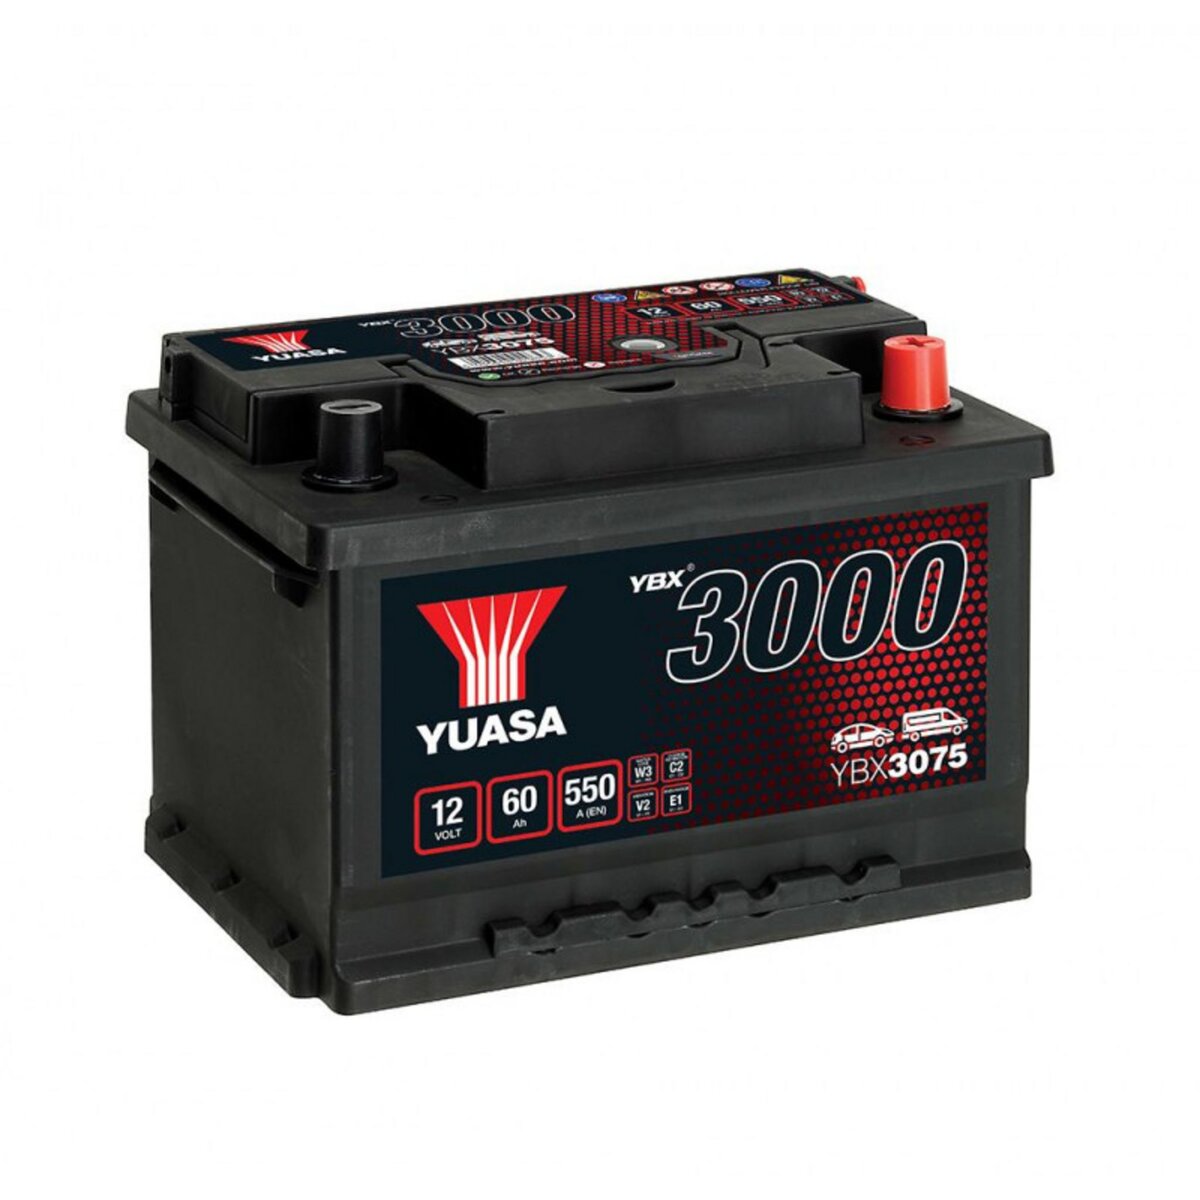 YUASA Batterie Yuasa SMF YBX3075 12V 60ah 550A